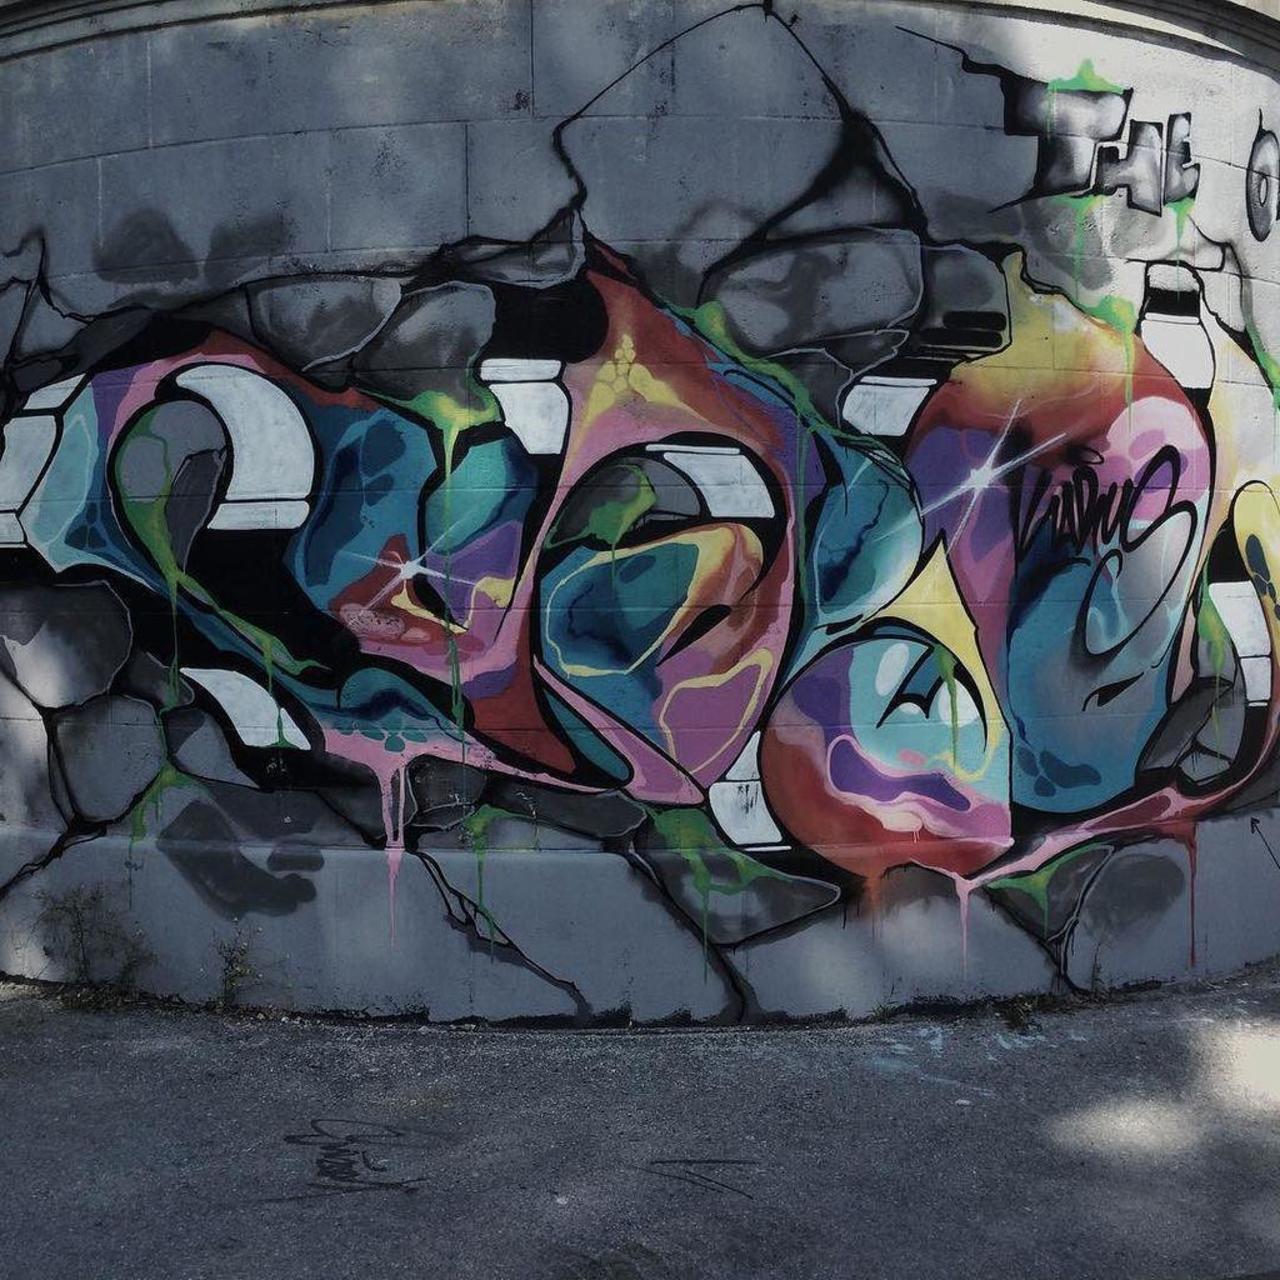 RT @artpushr: via #konstant_gr "http://bit.ly/1JG5ZNu" #graffiti #streetart http://t.co/8dg3bfOCq0